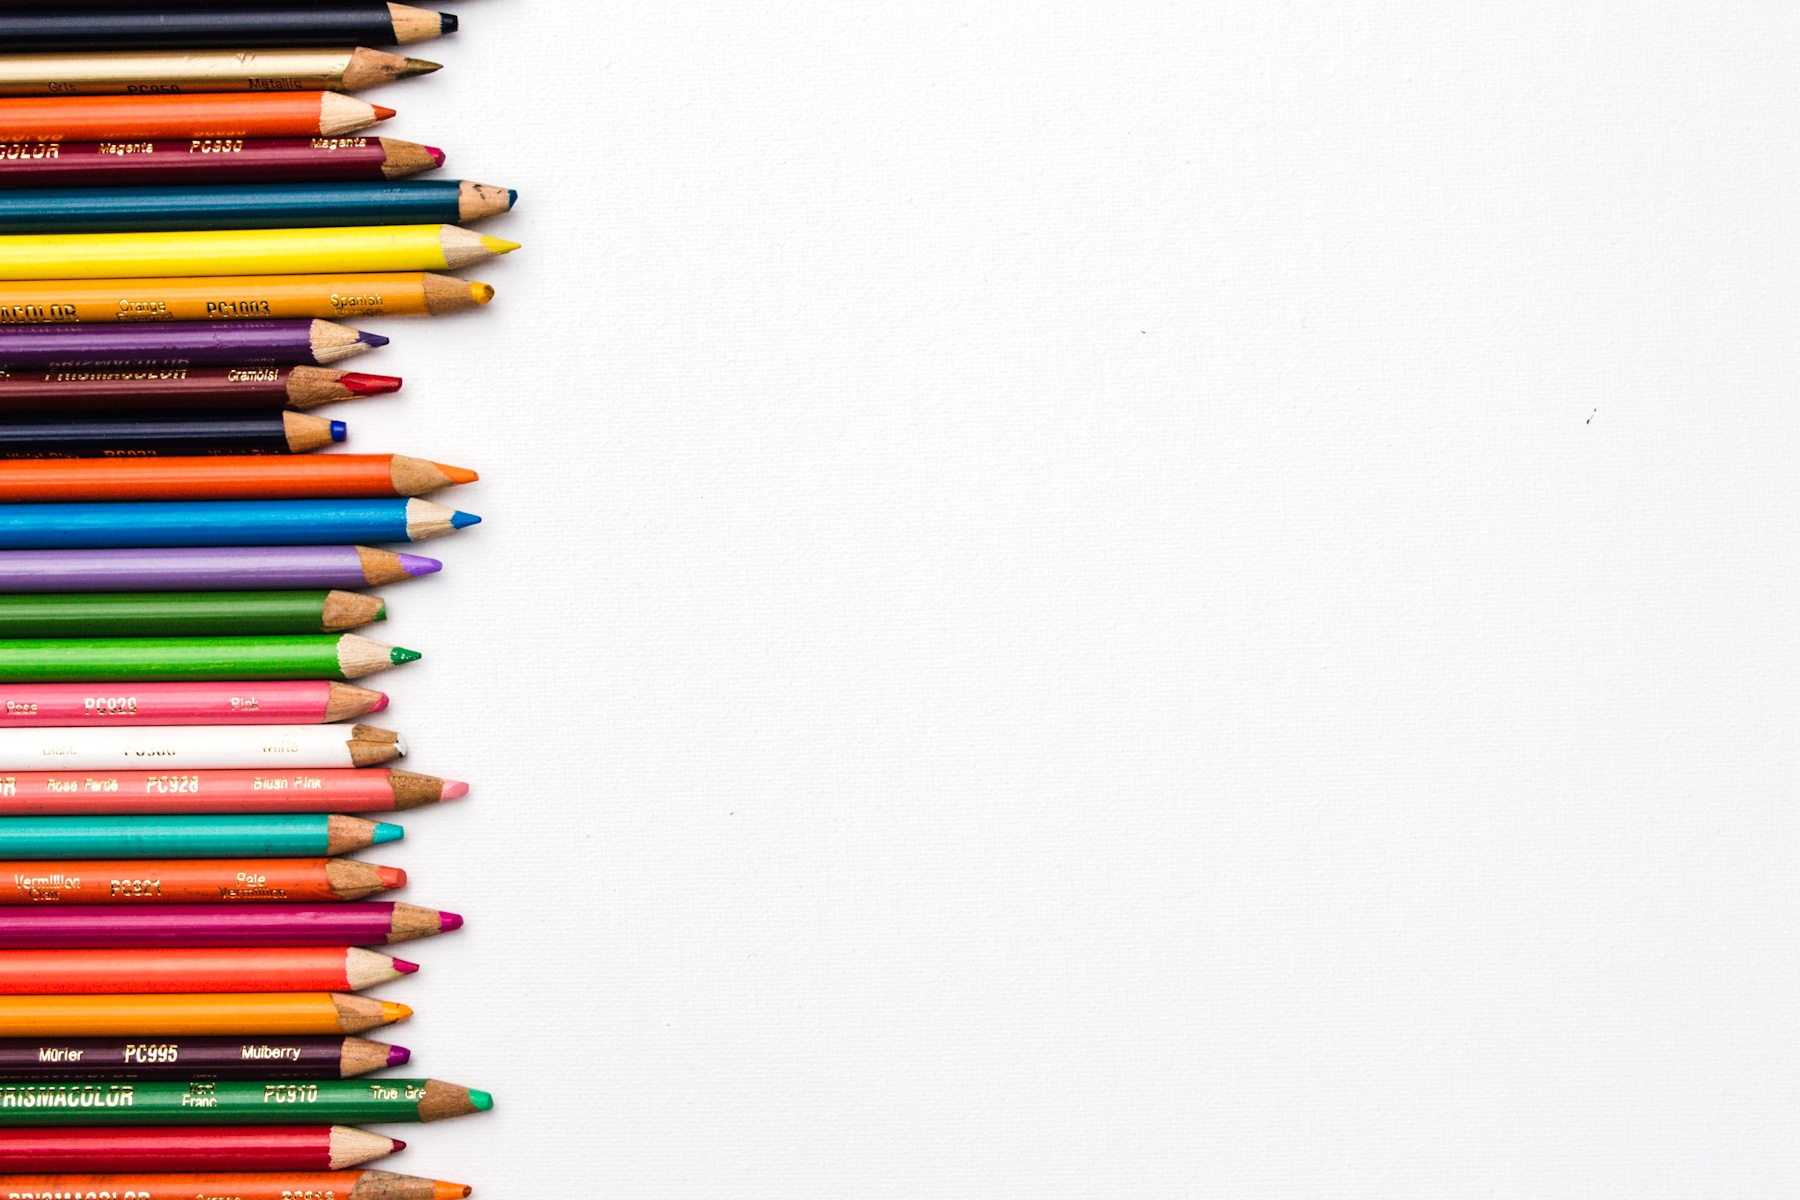 decorative image of colored pencils